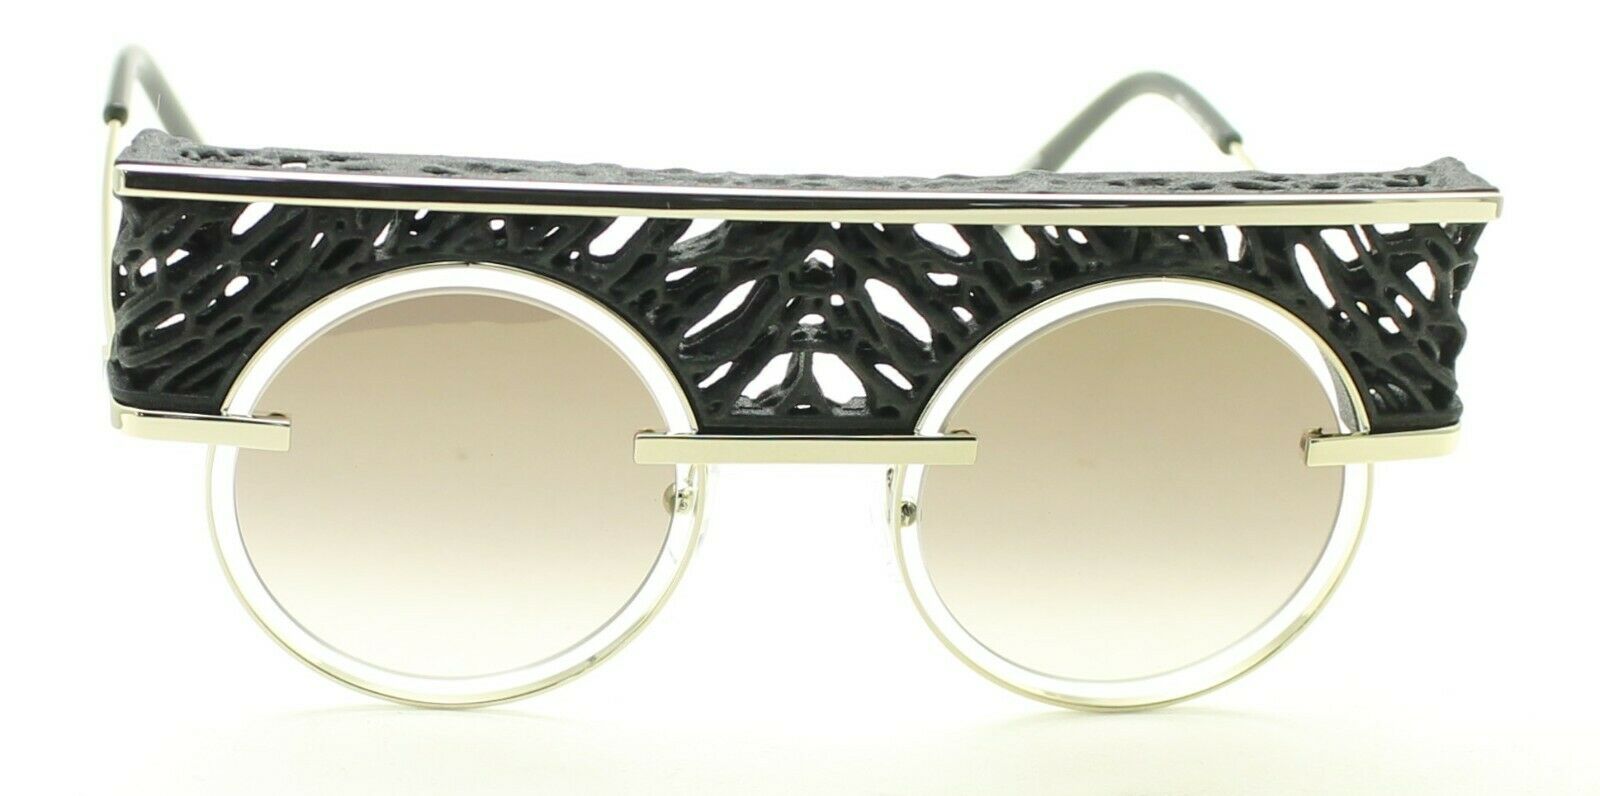 OXYDO LIMITED EDITION Francis Bitonti No. 1 J5G Gold Sunglasses Shades Eyewear